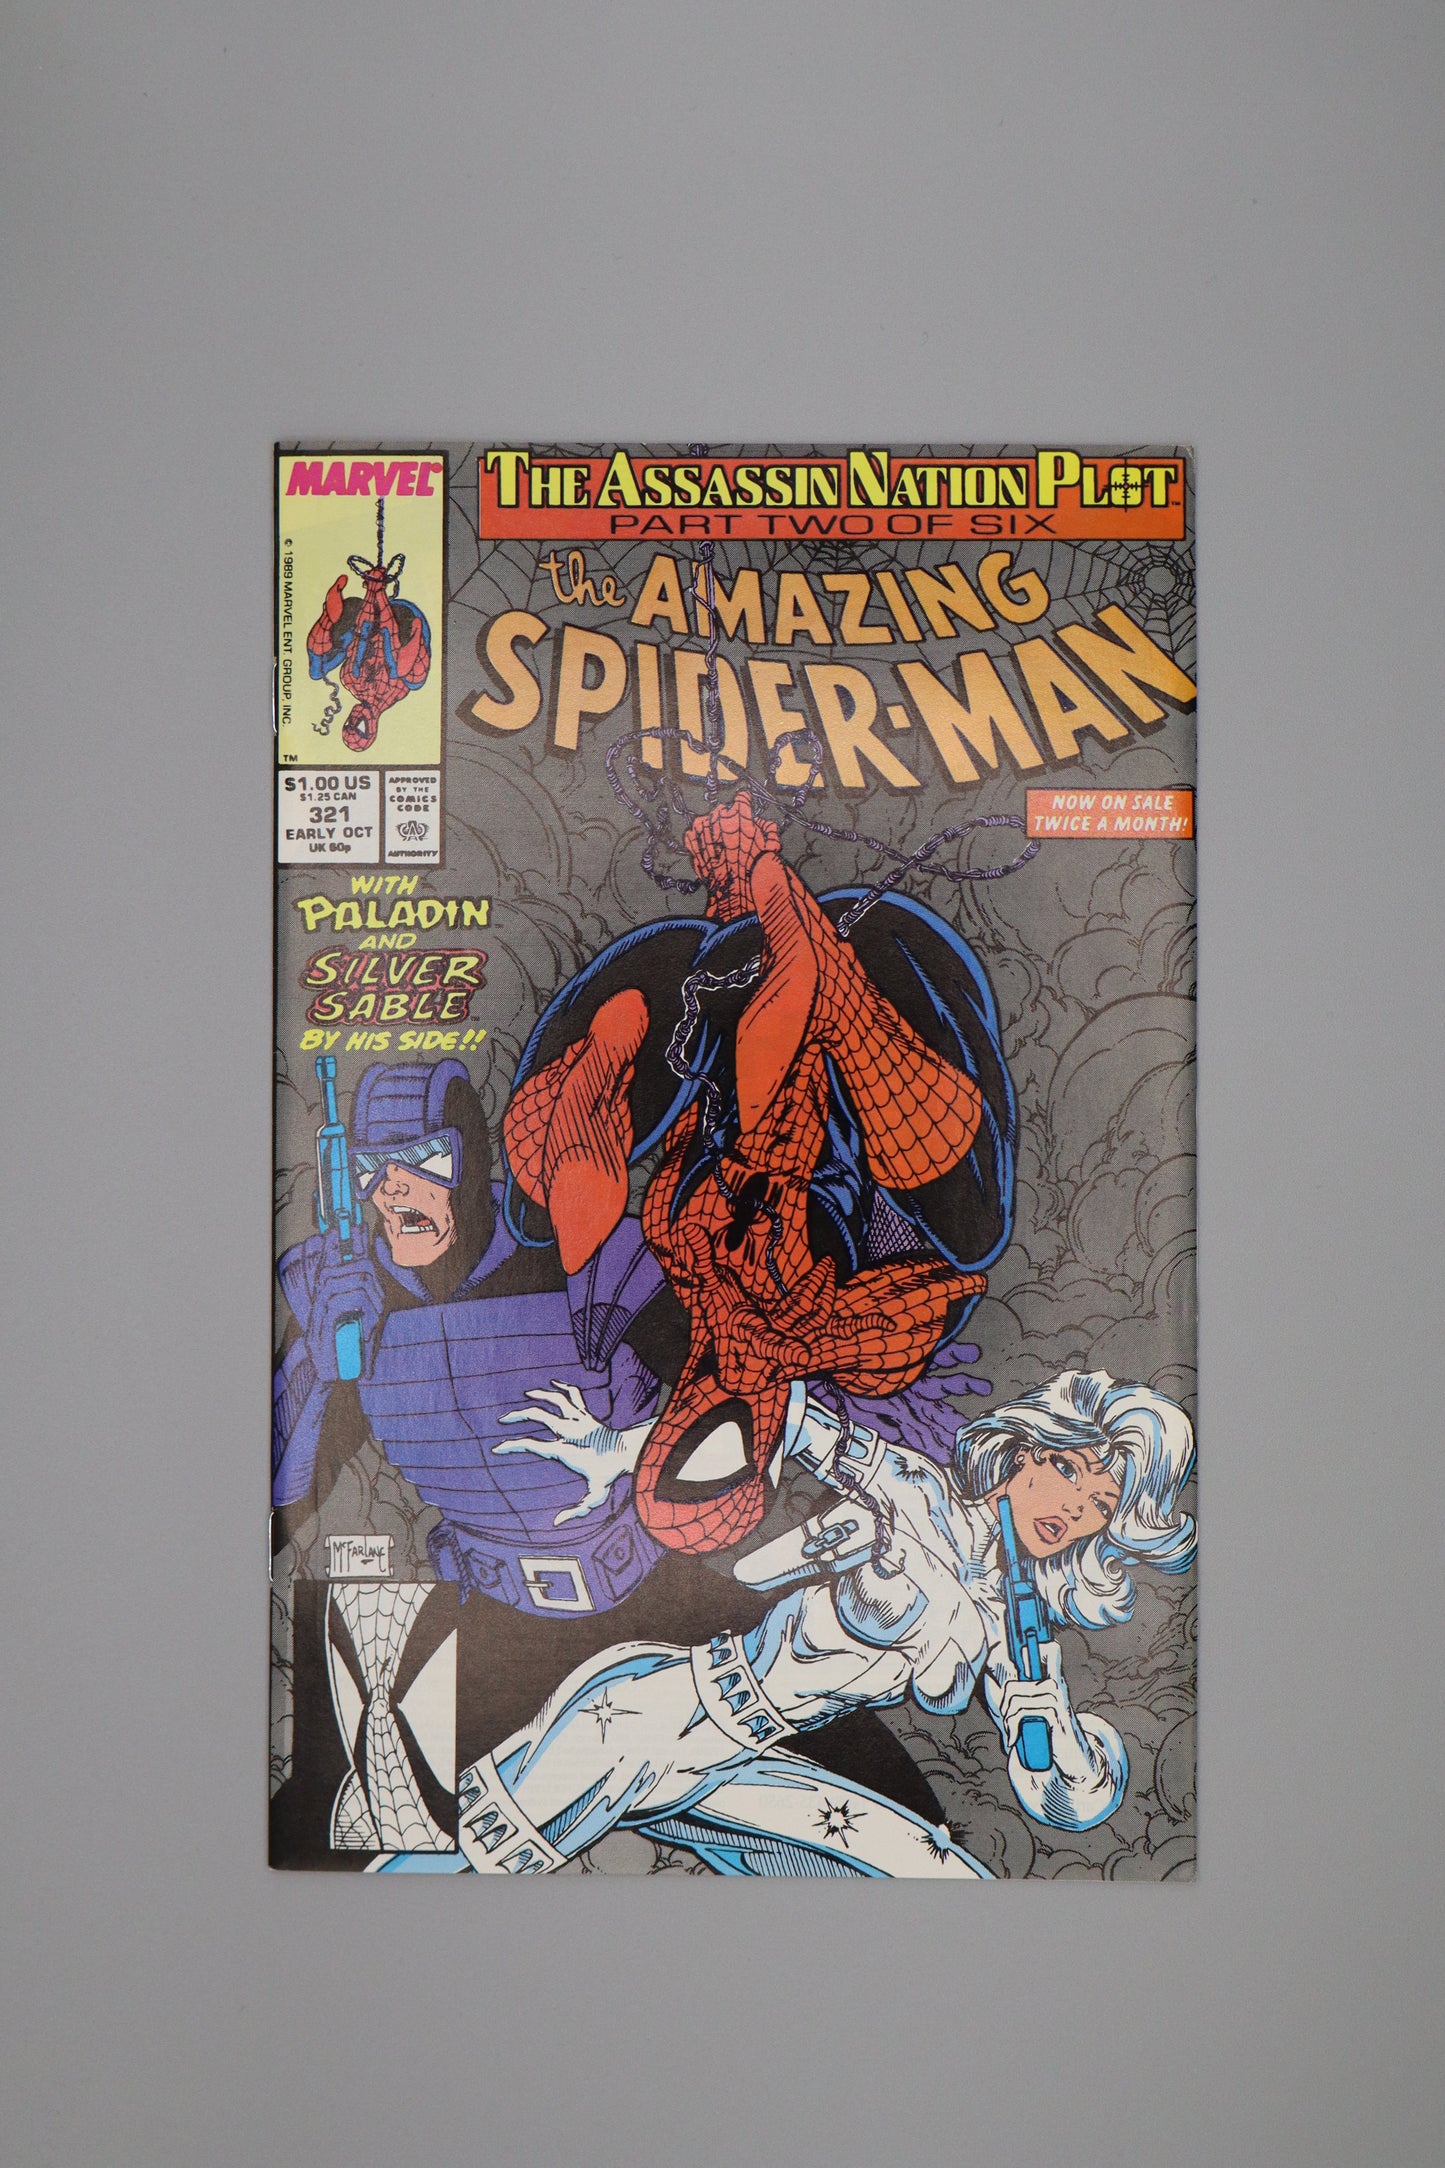 The Amazing Spider-man #321